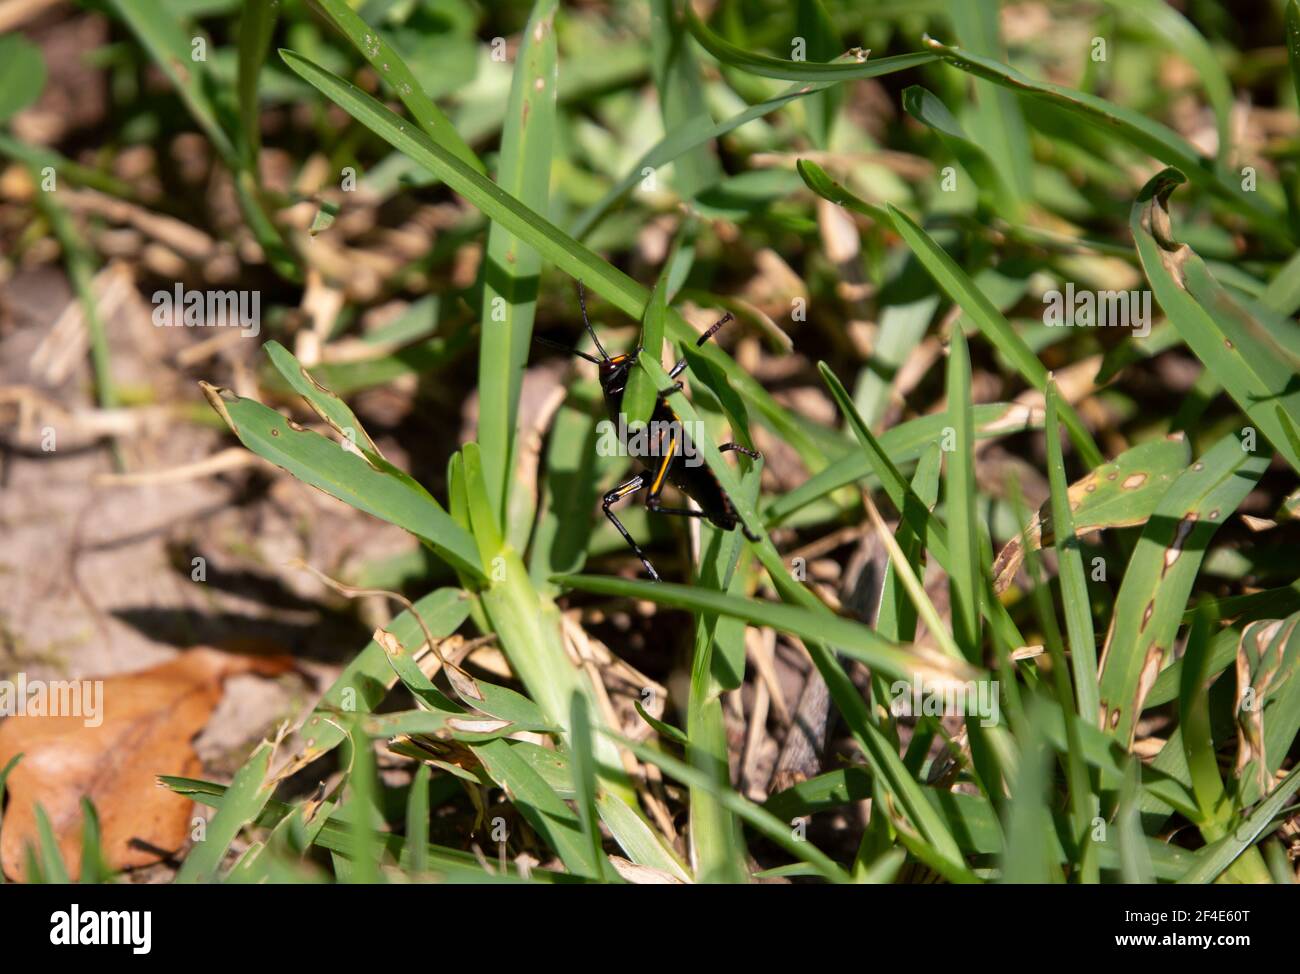 Southeastern lubber grasshopper (Romalea microptera) climbing blades of grass Stock Photo